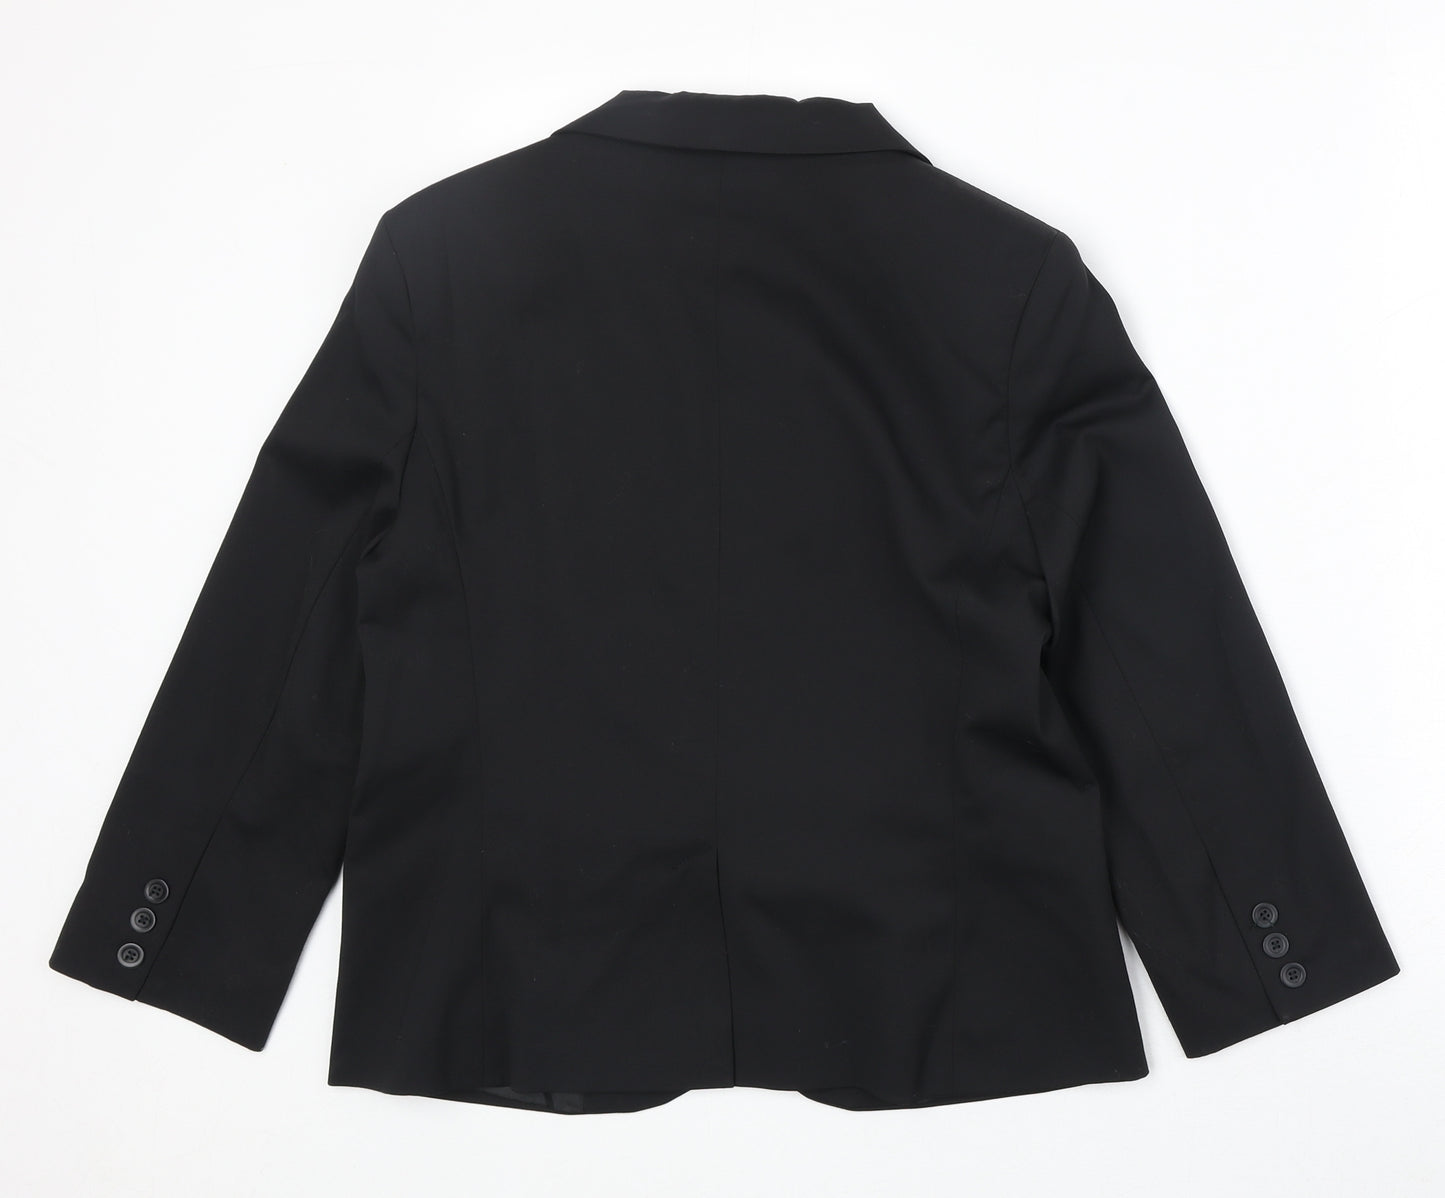 ASOS Womens Black Polyester Jacket Blazer Size 12